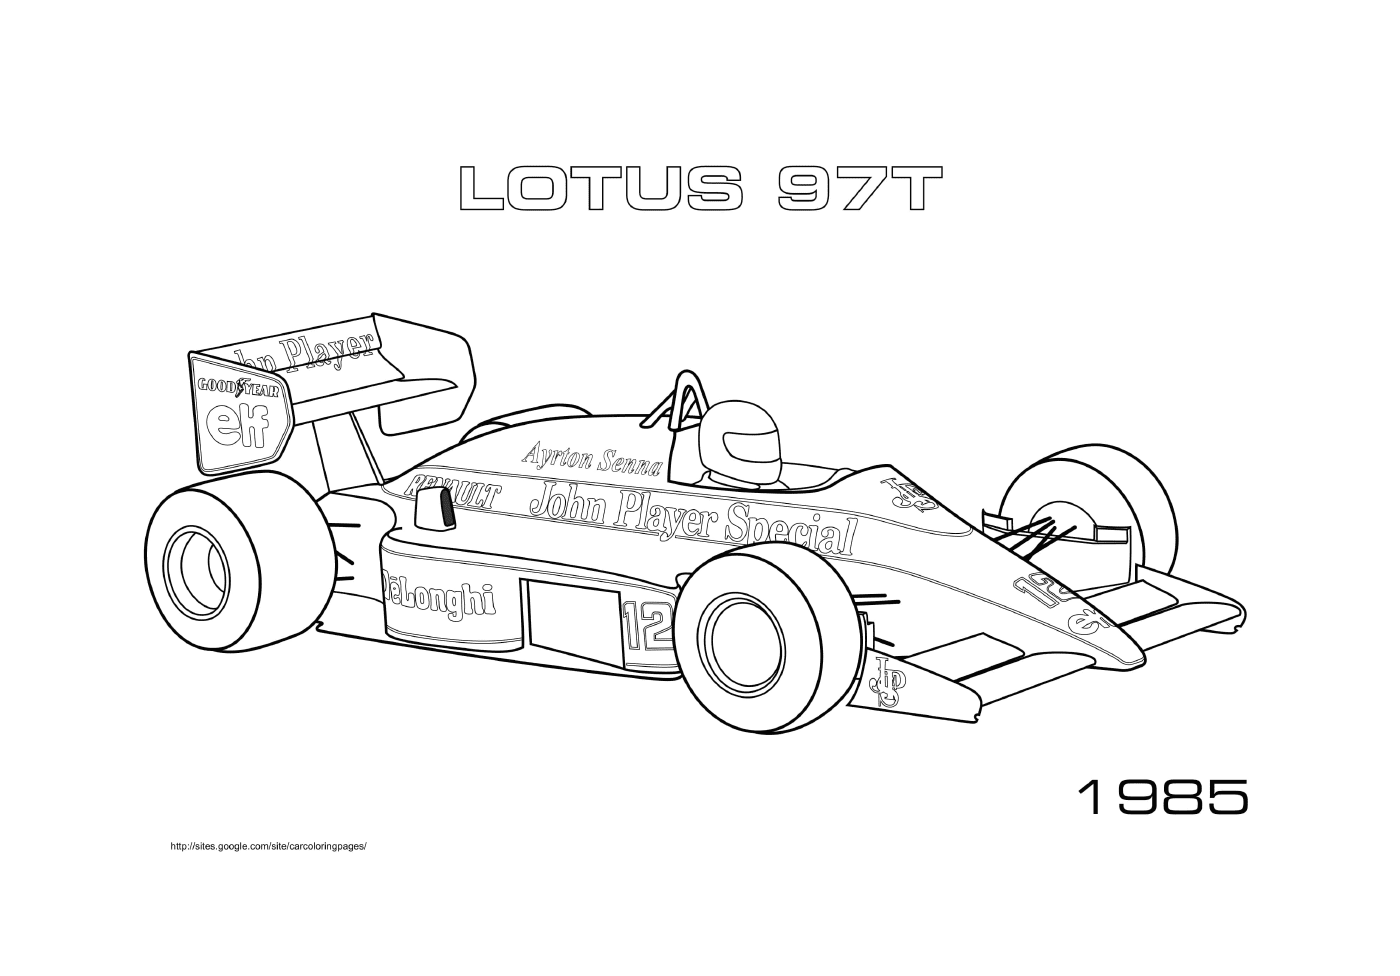  Lotus 97t von 1985 